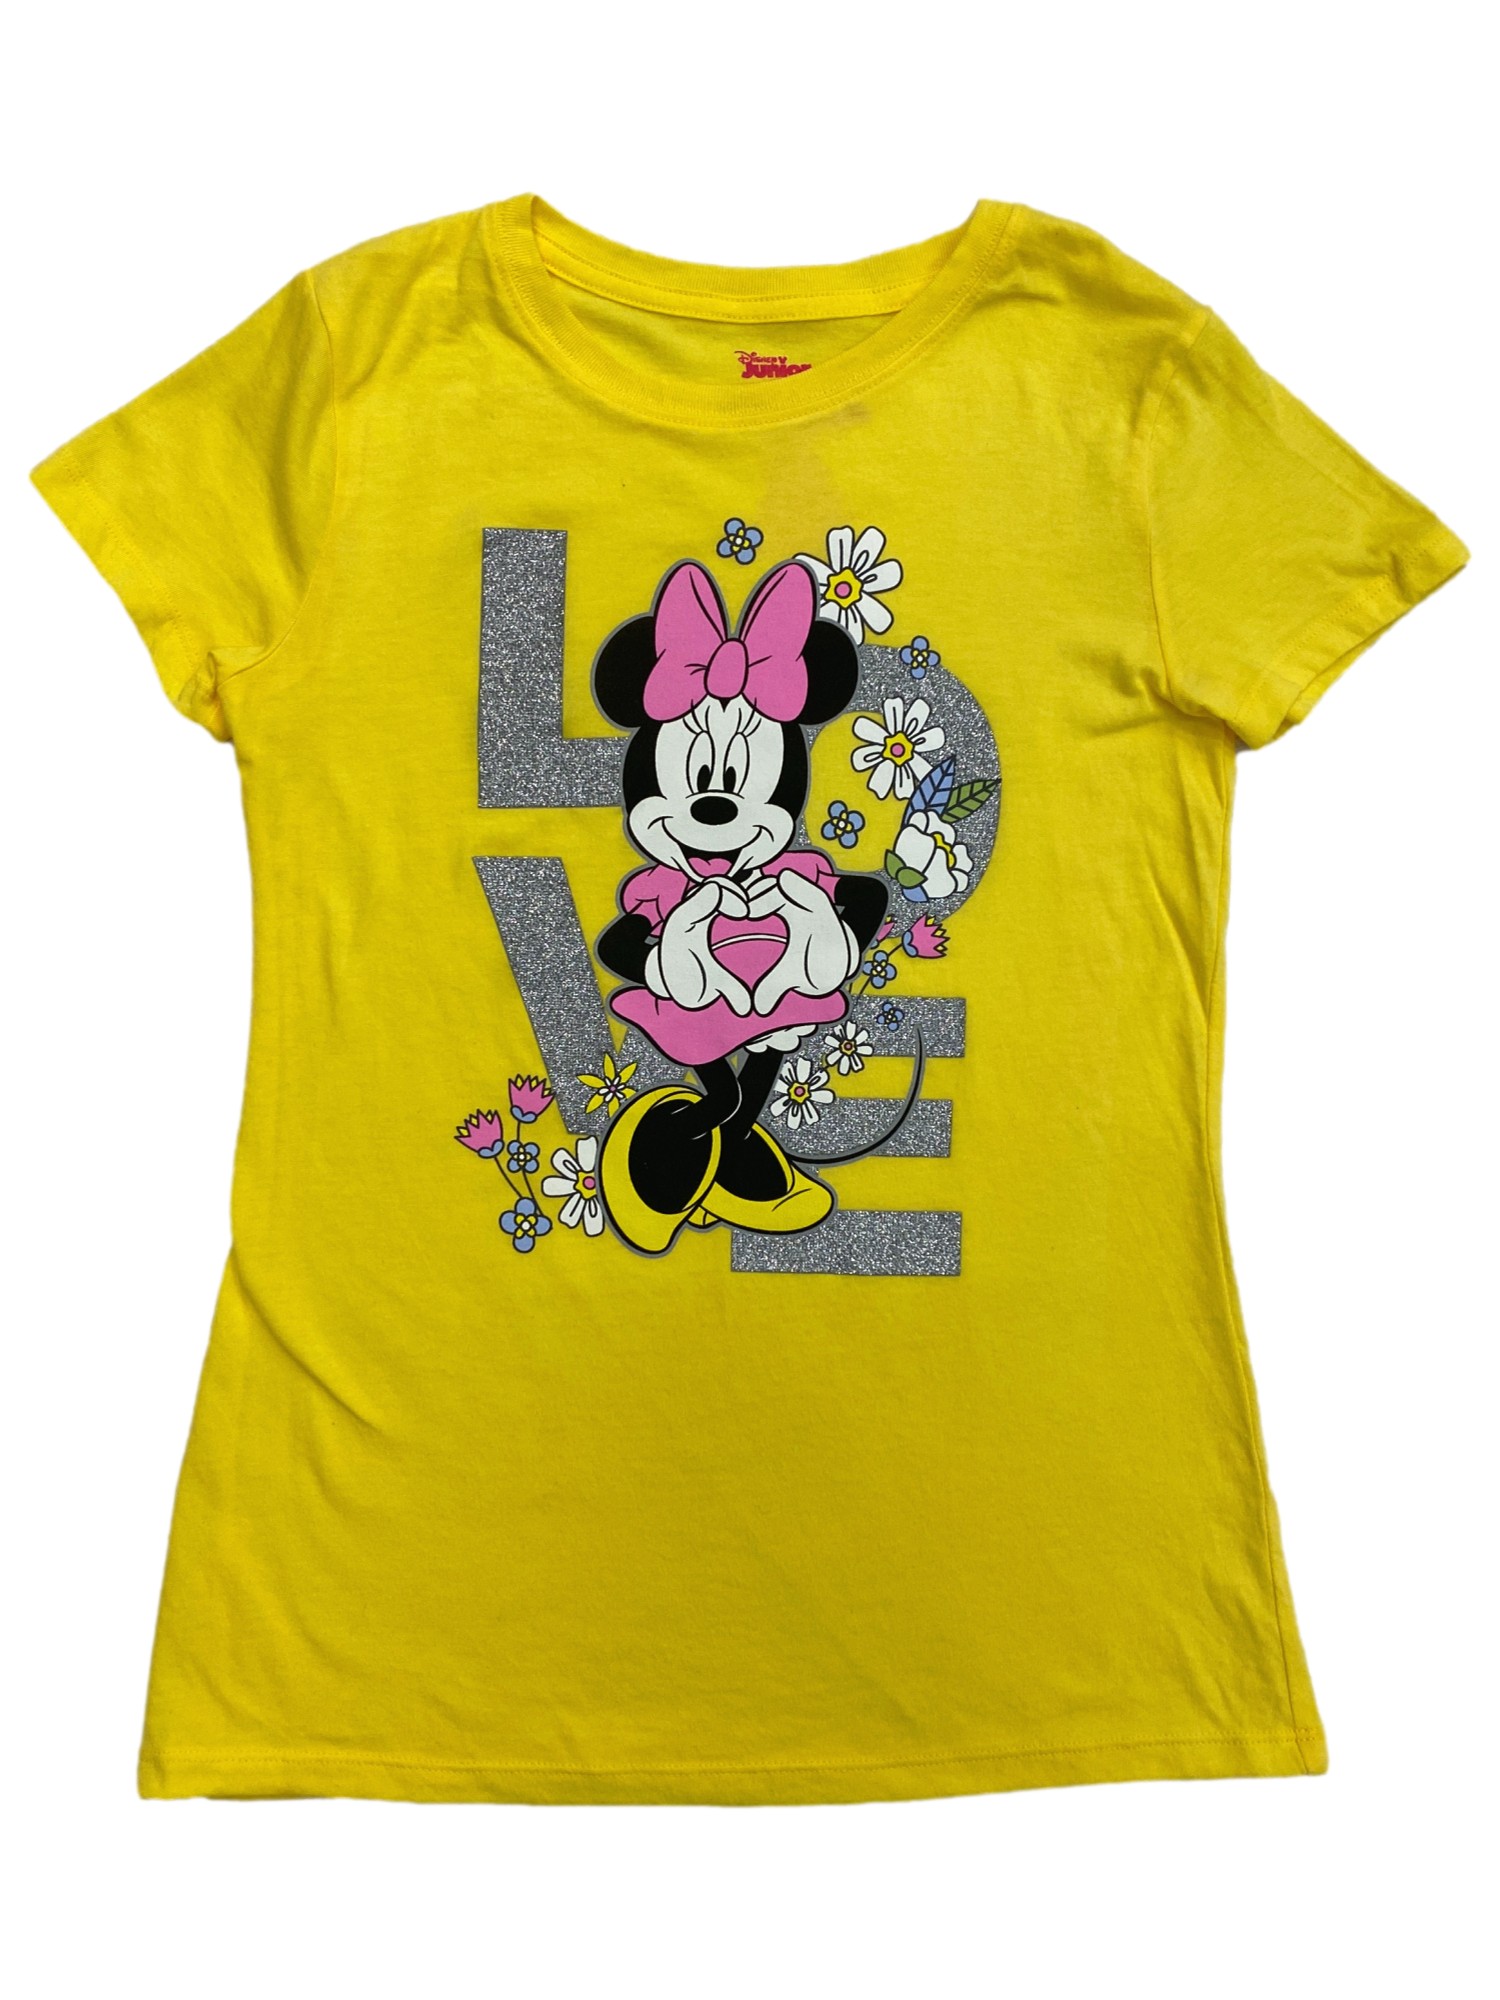 Disney Girls Yellow Sparkle Minnie Mouse Love Tee Shirt T-Shirt